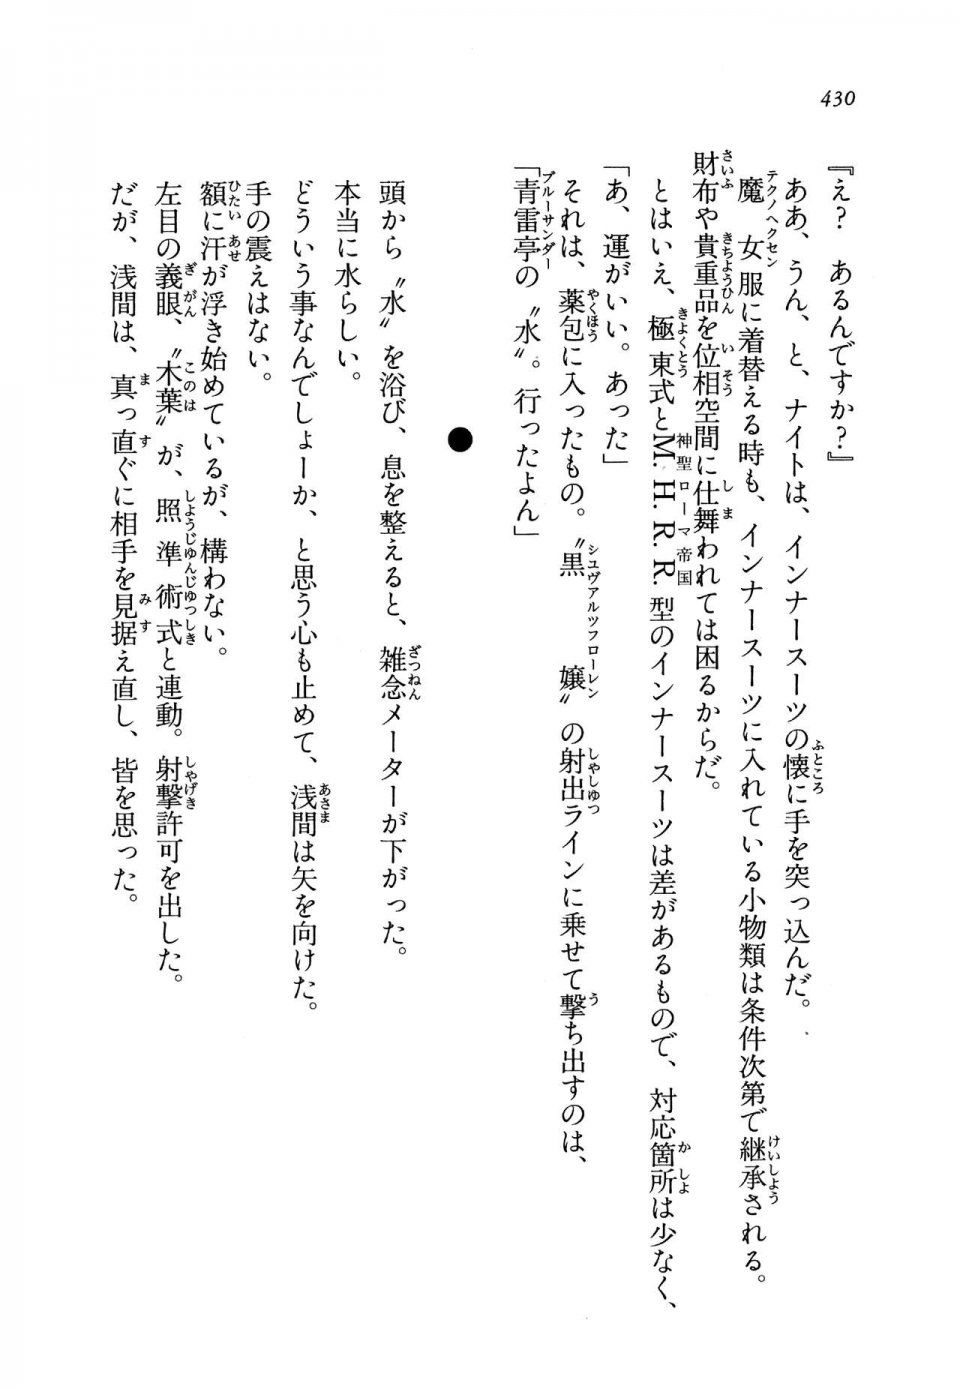 Kyoukai Senjou no Horizon BD Special Mininovel Vol 8(4B) - Photo #434